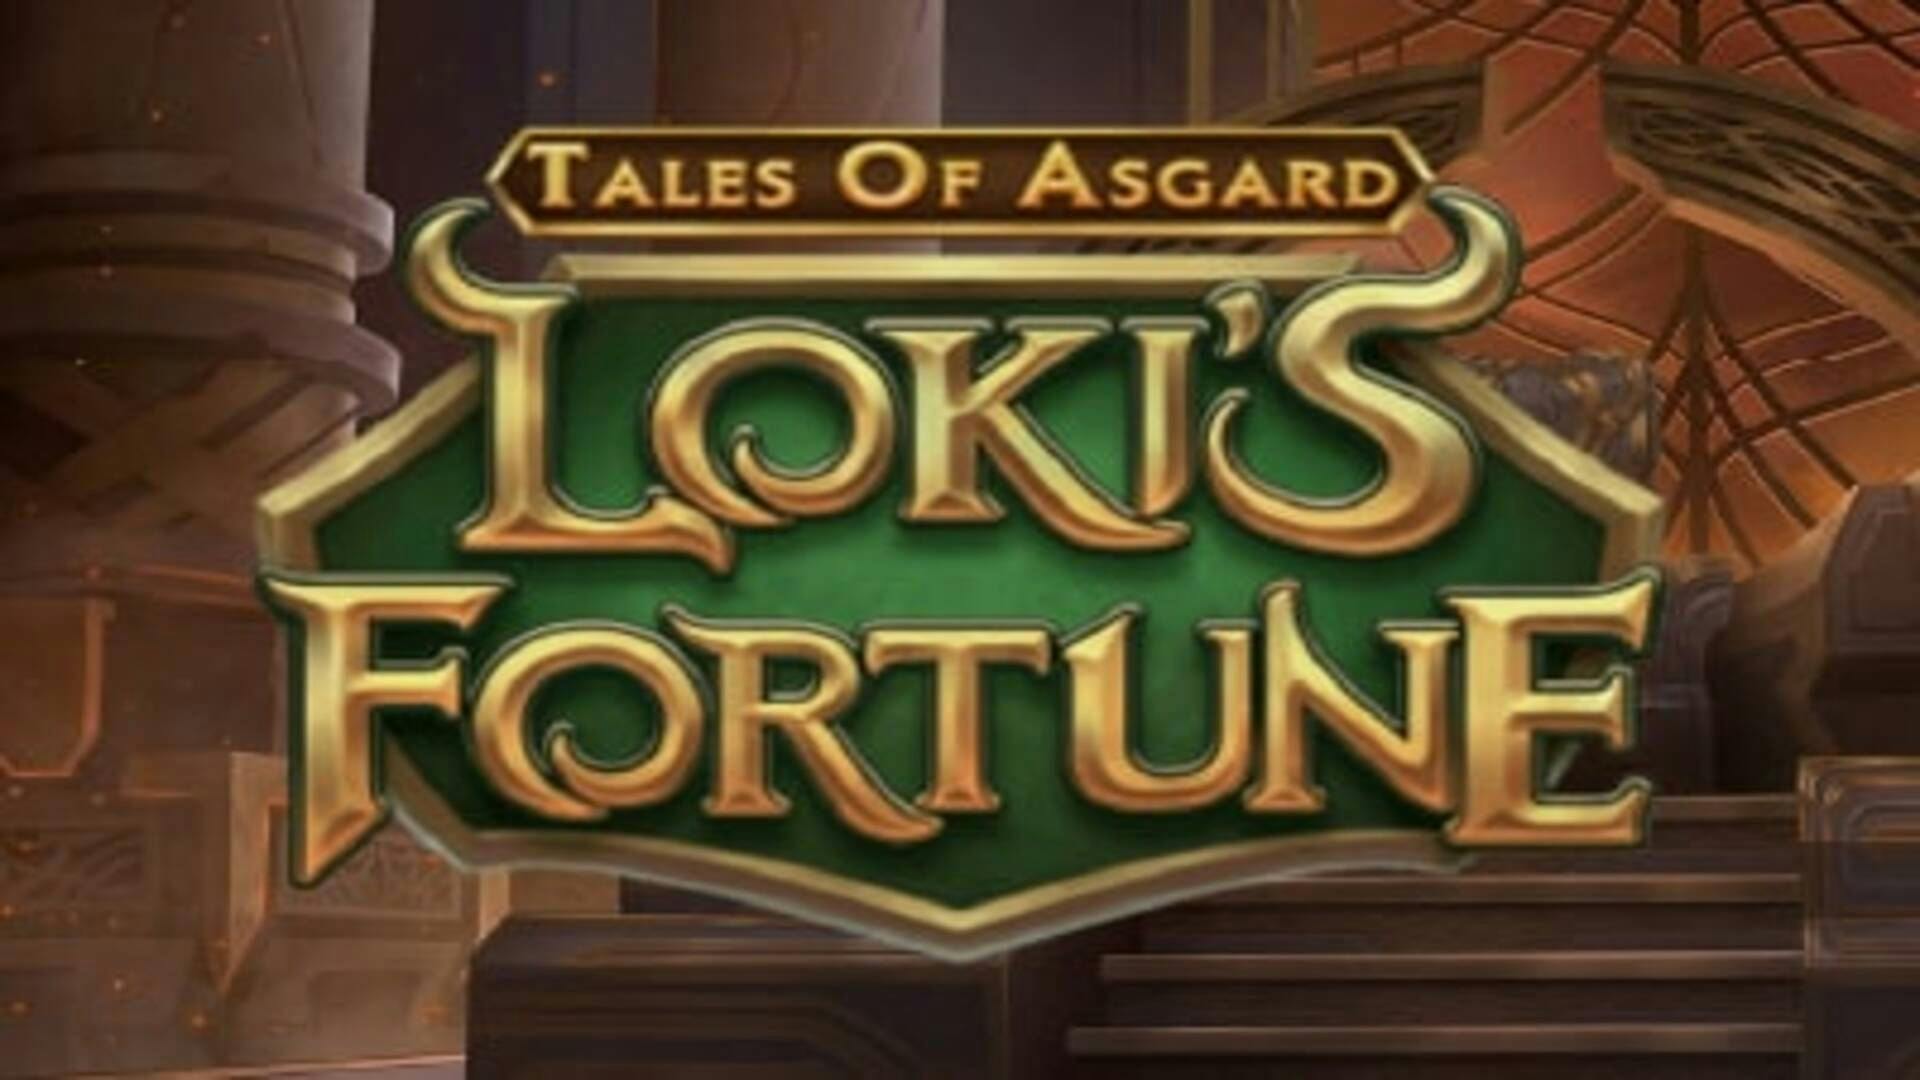 Tales of Asgard Loki's Fortune Slot Machine Free Game Play 